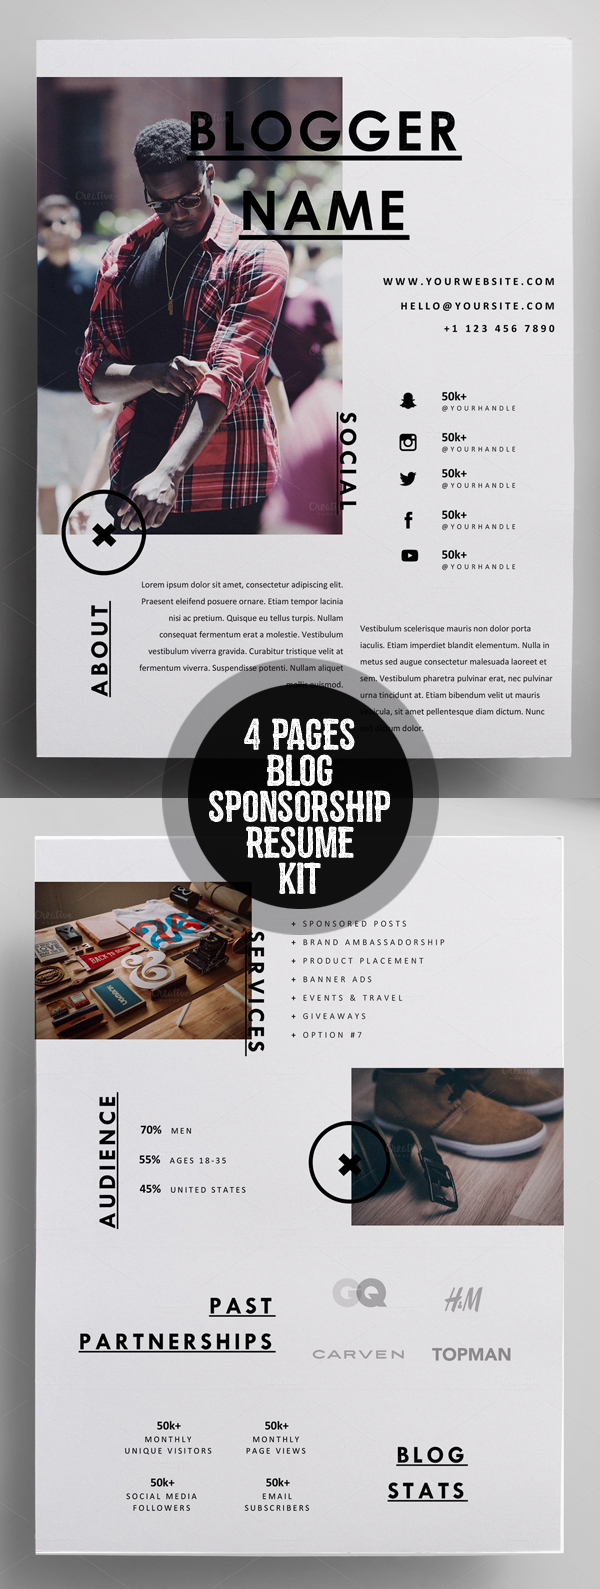 Creative 4 Pages Blog Sponsorship Kit Resume Template